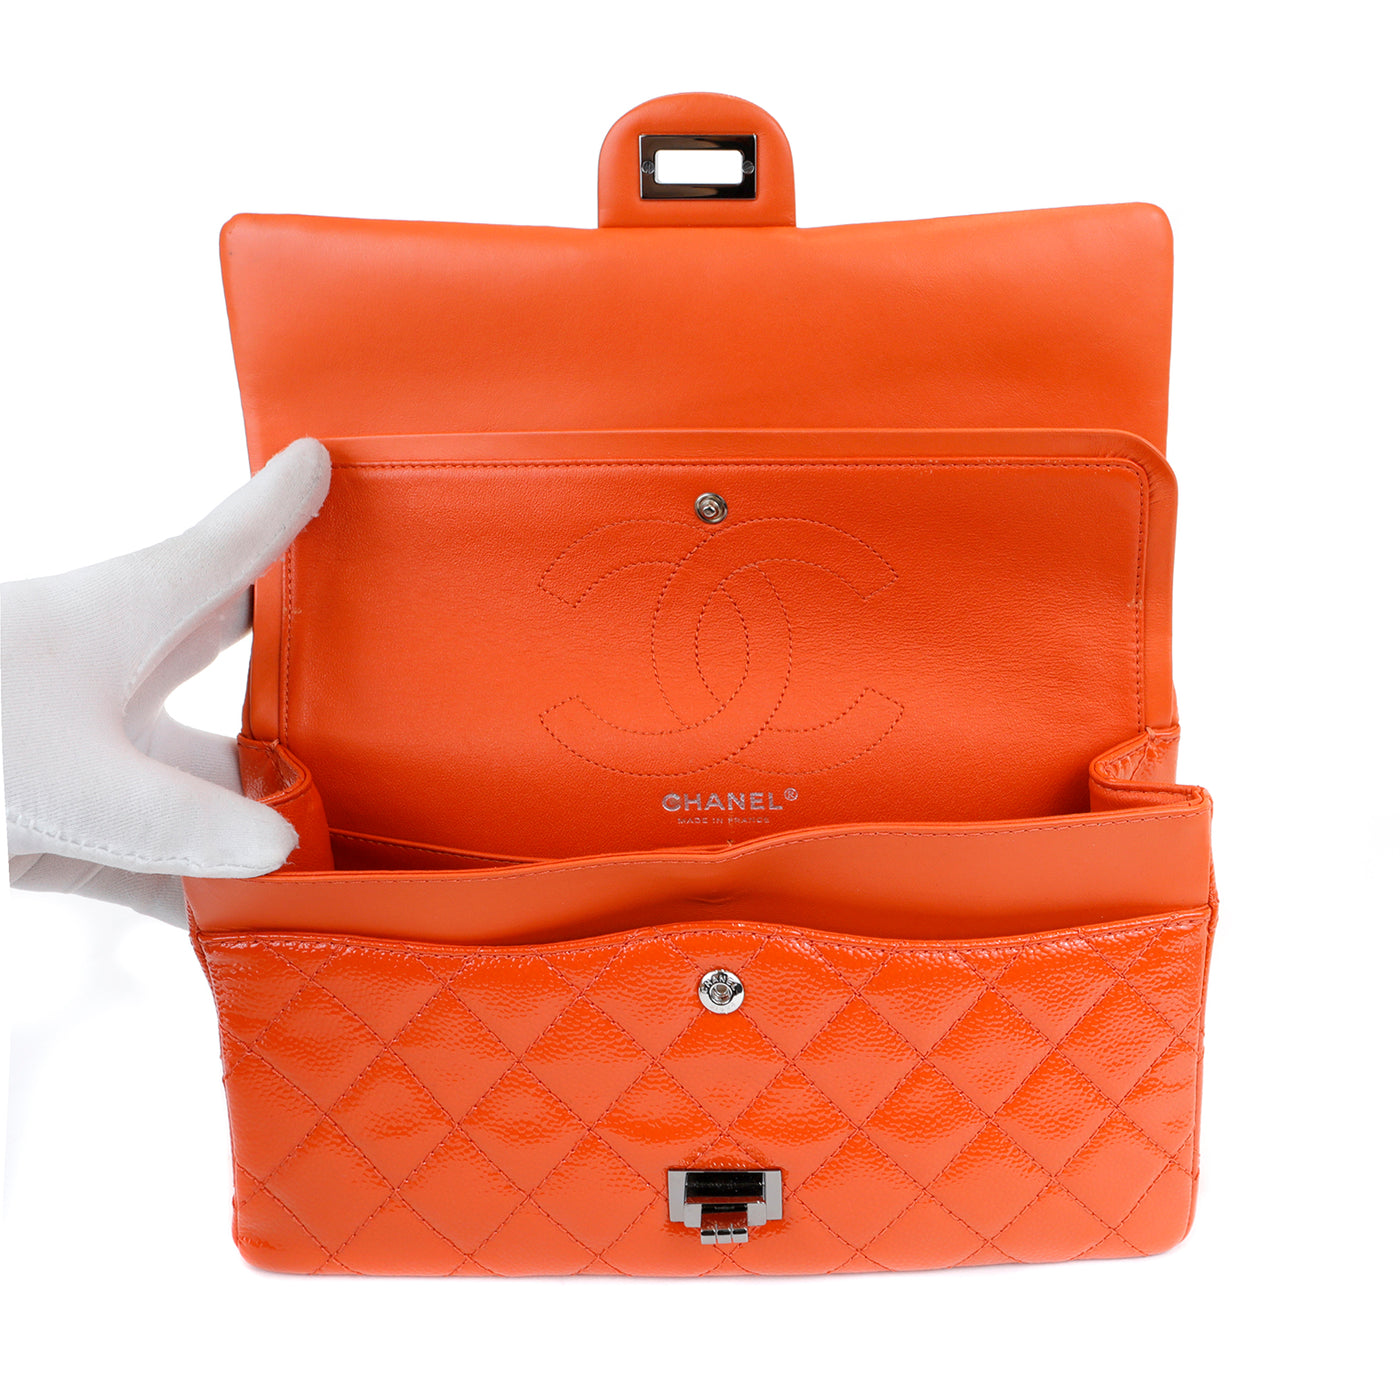 Chanel Tangerine Caviar Reissue Flap Bag with Gun Metal Hardware